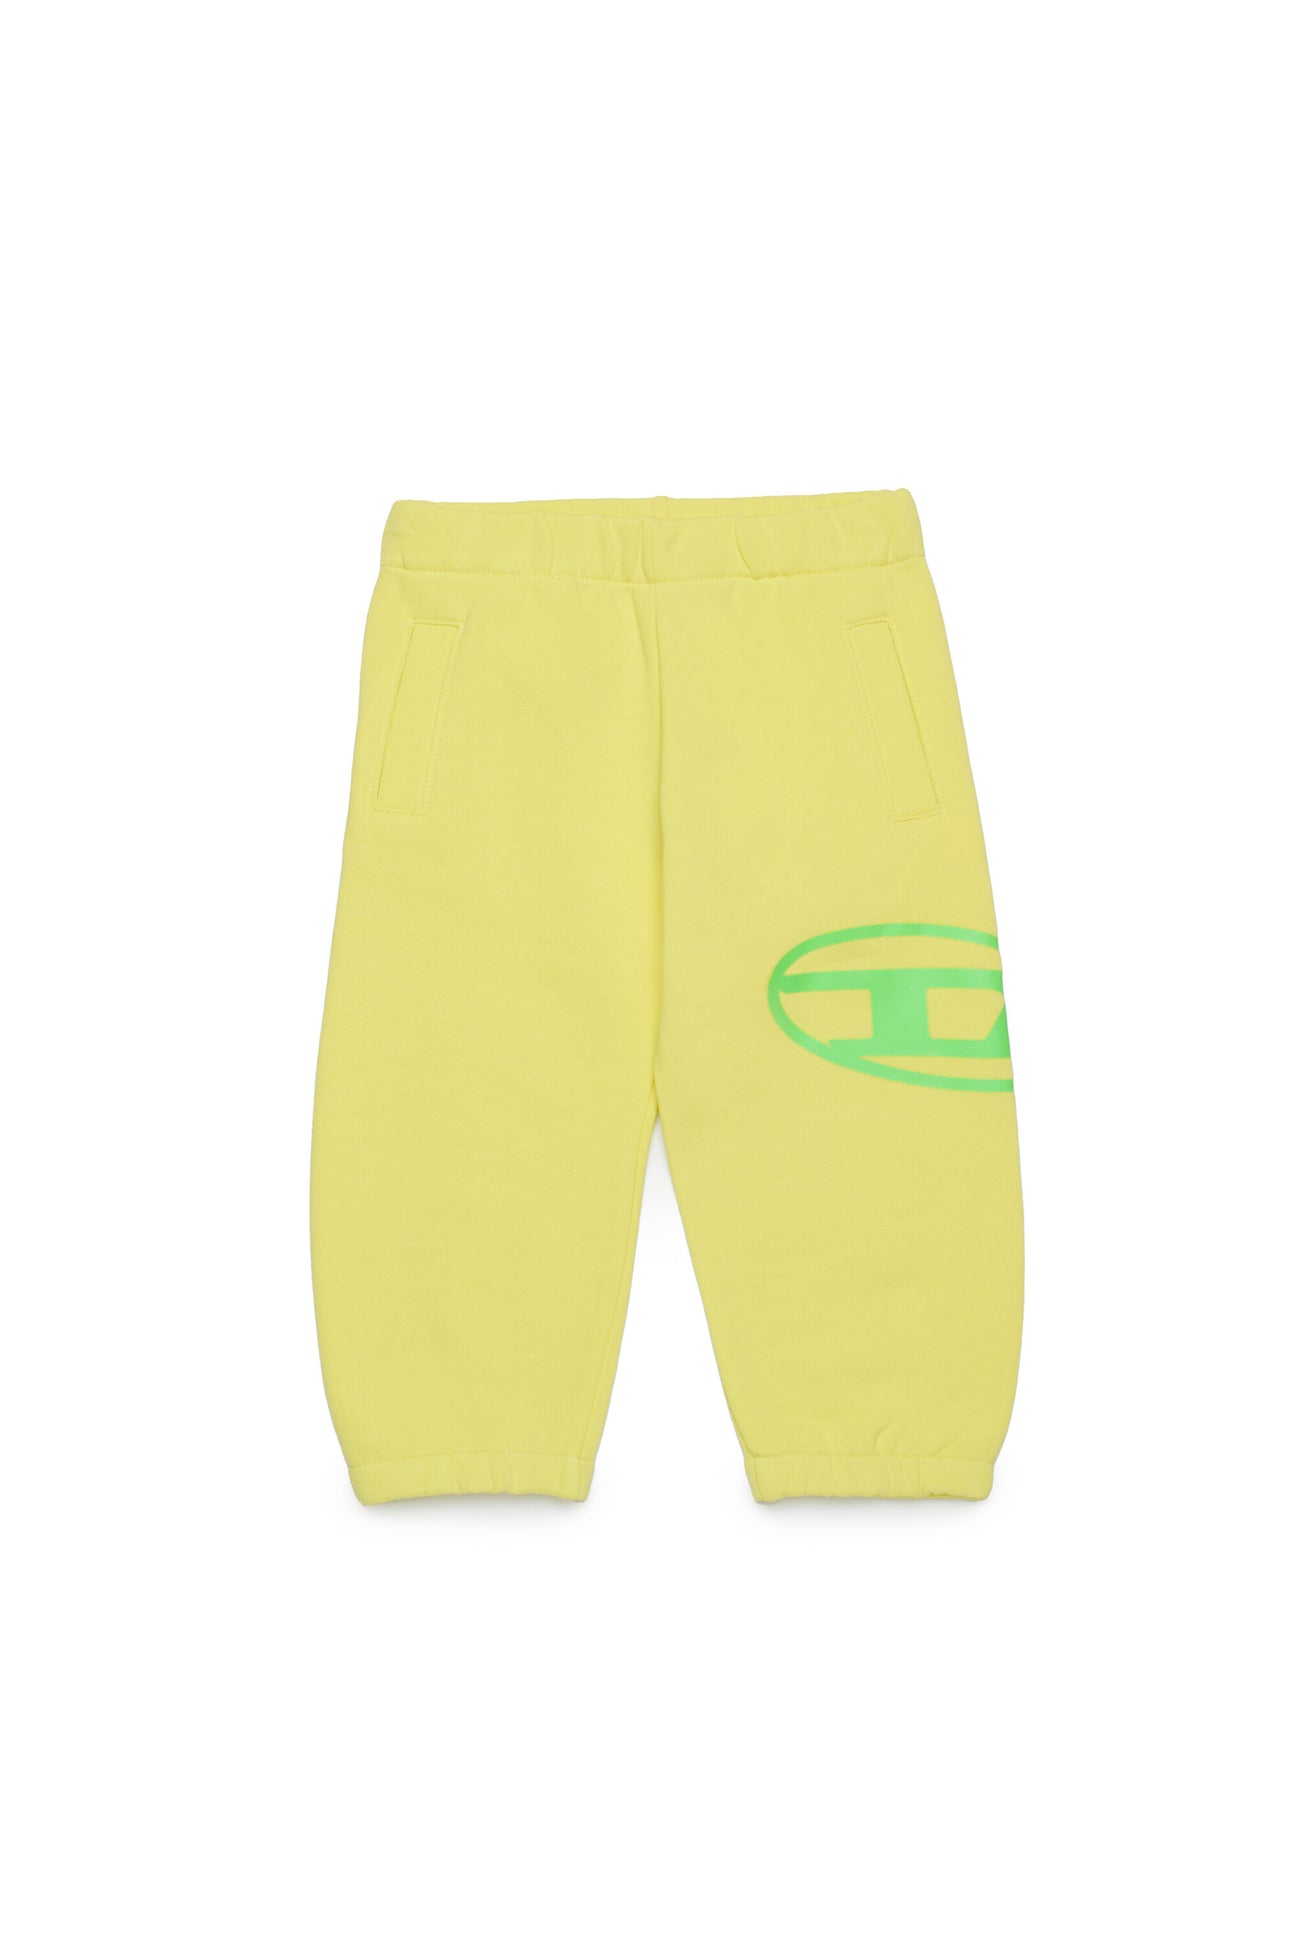 Pantalones deportivos en chándal con logotipo Oval D 